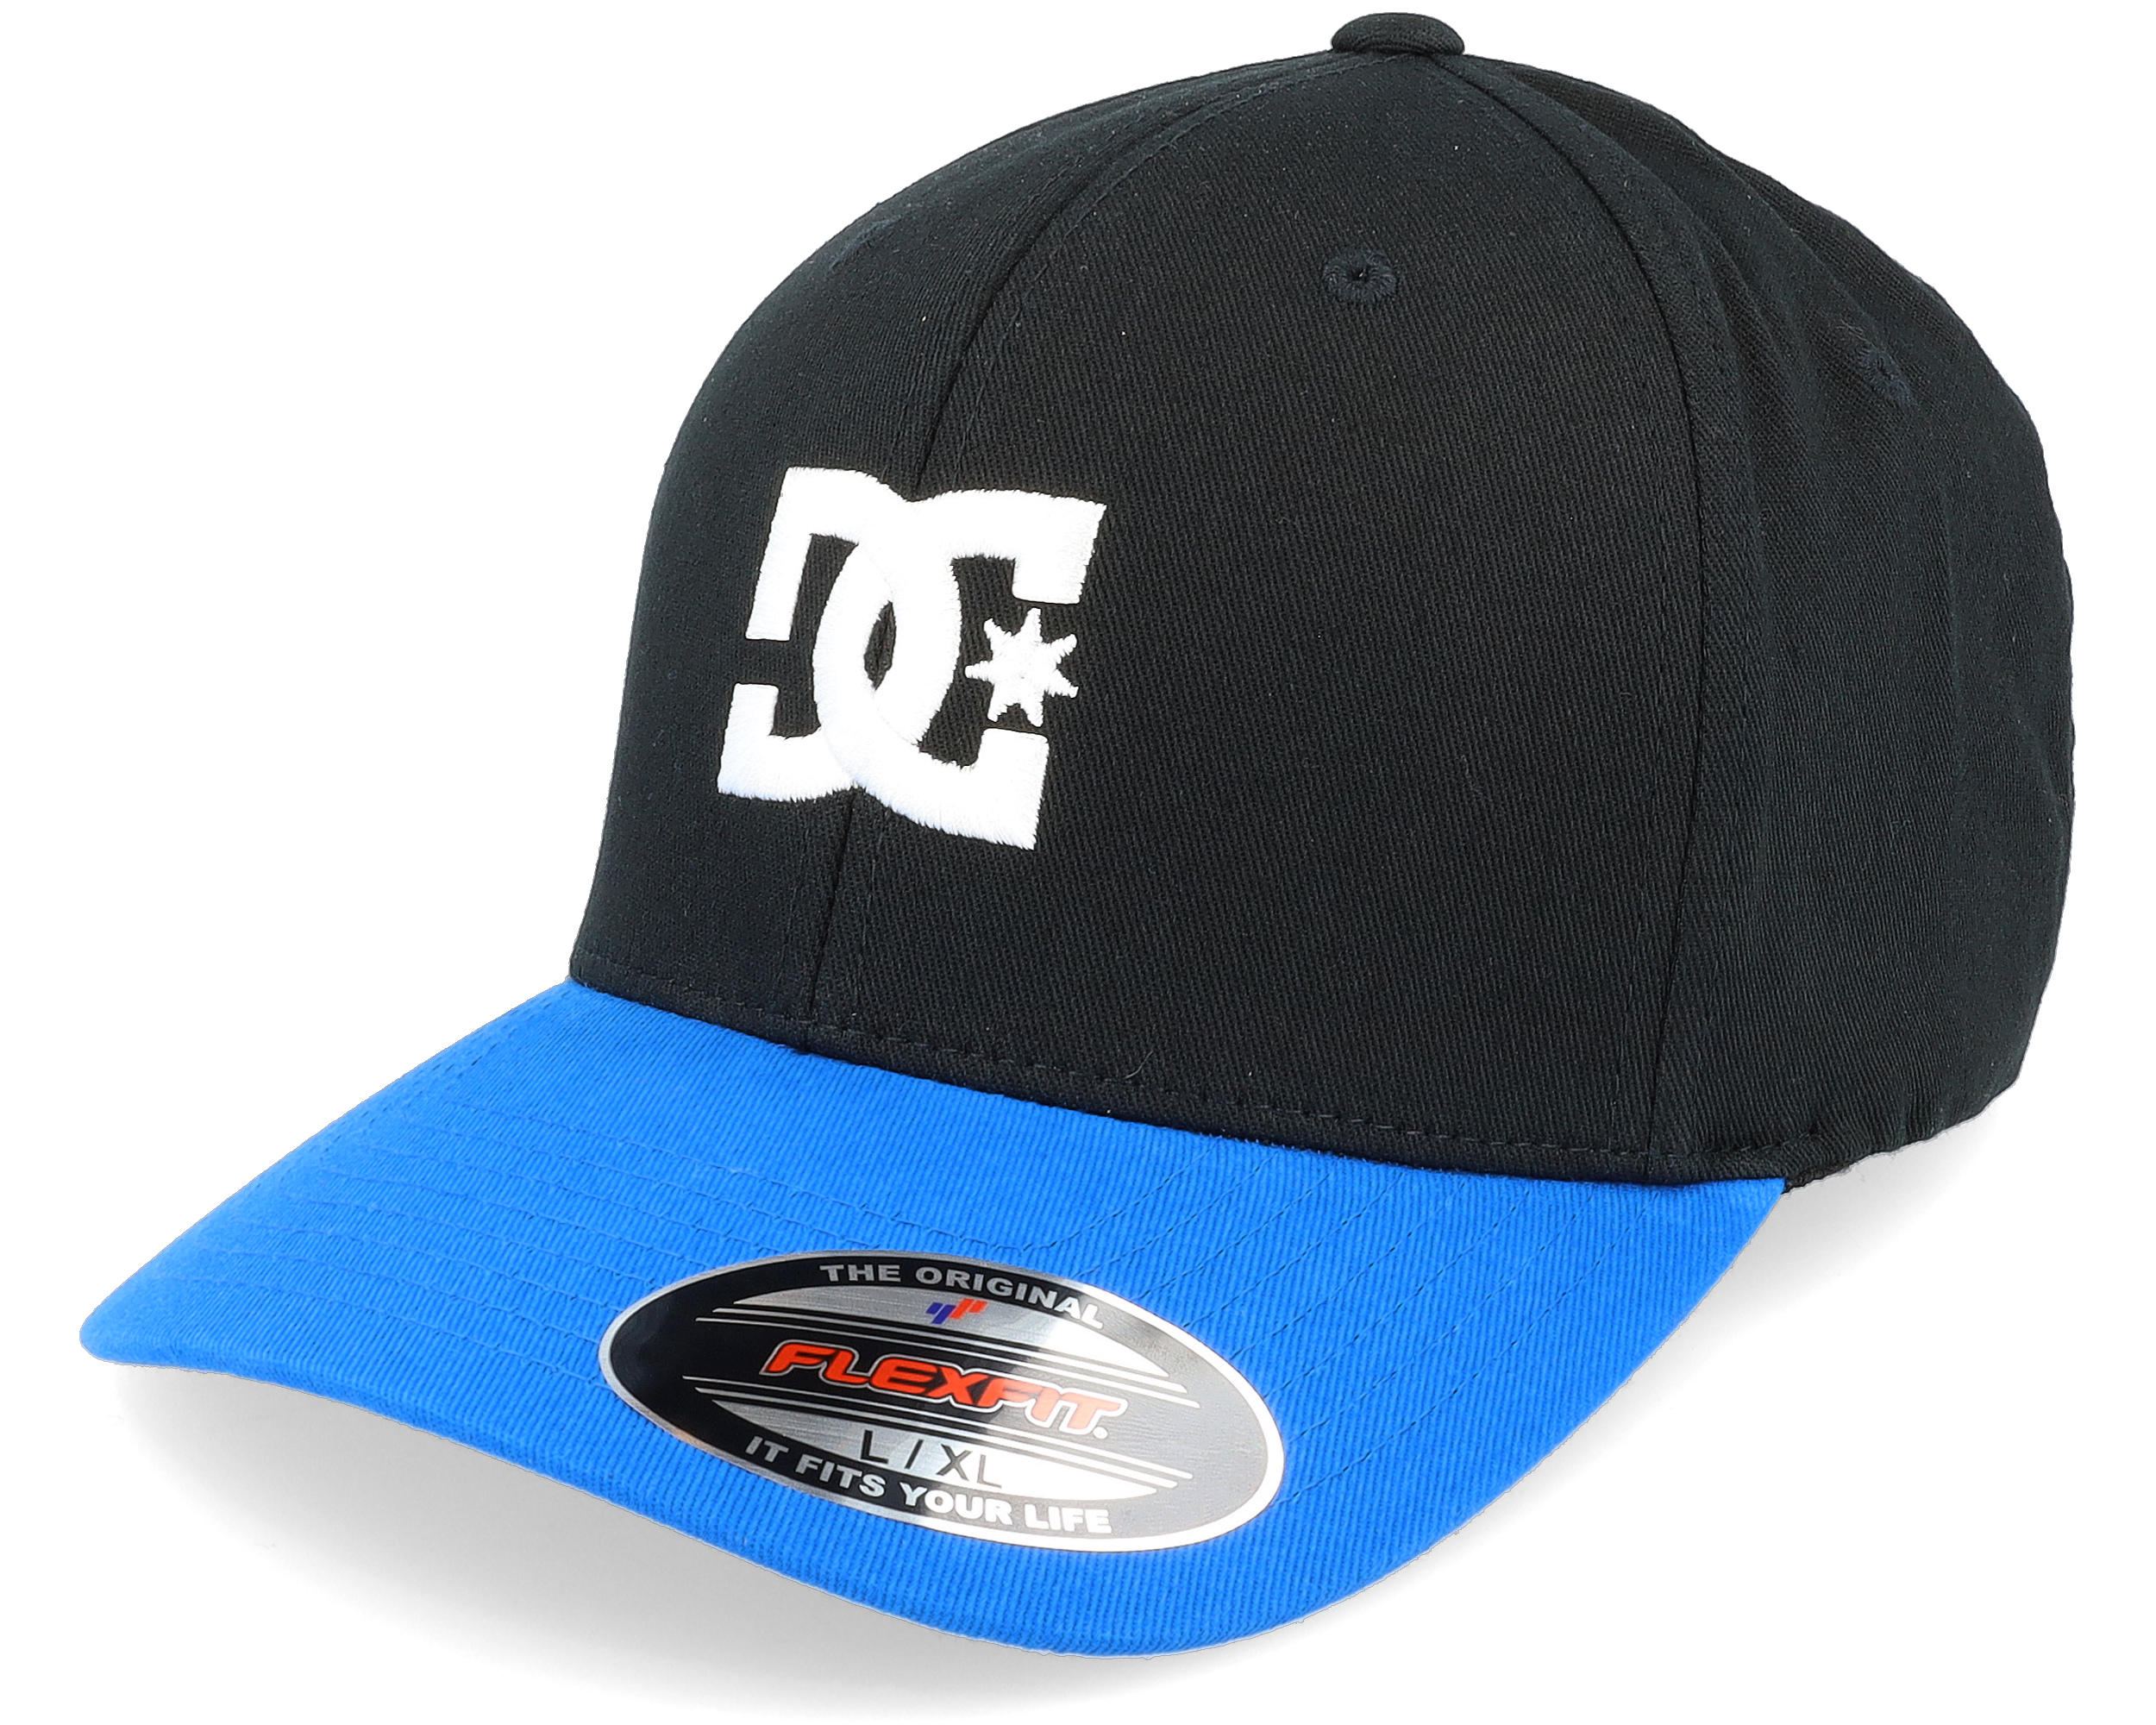 Cap Star Seasonal Black/Nautical Blue Flexfit - DC cap